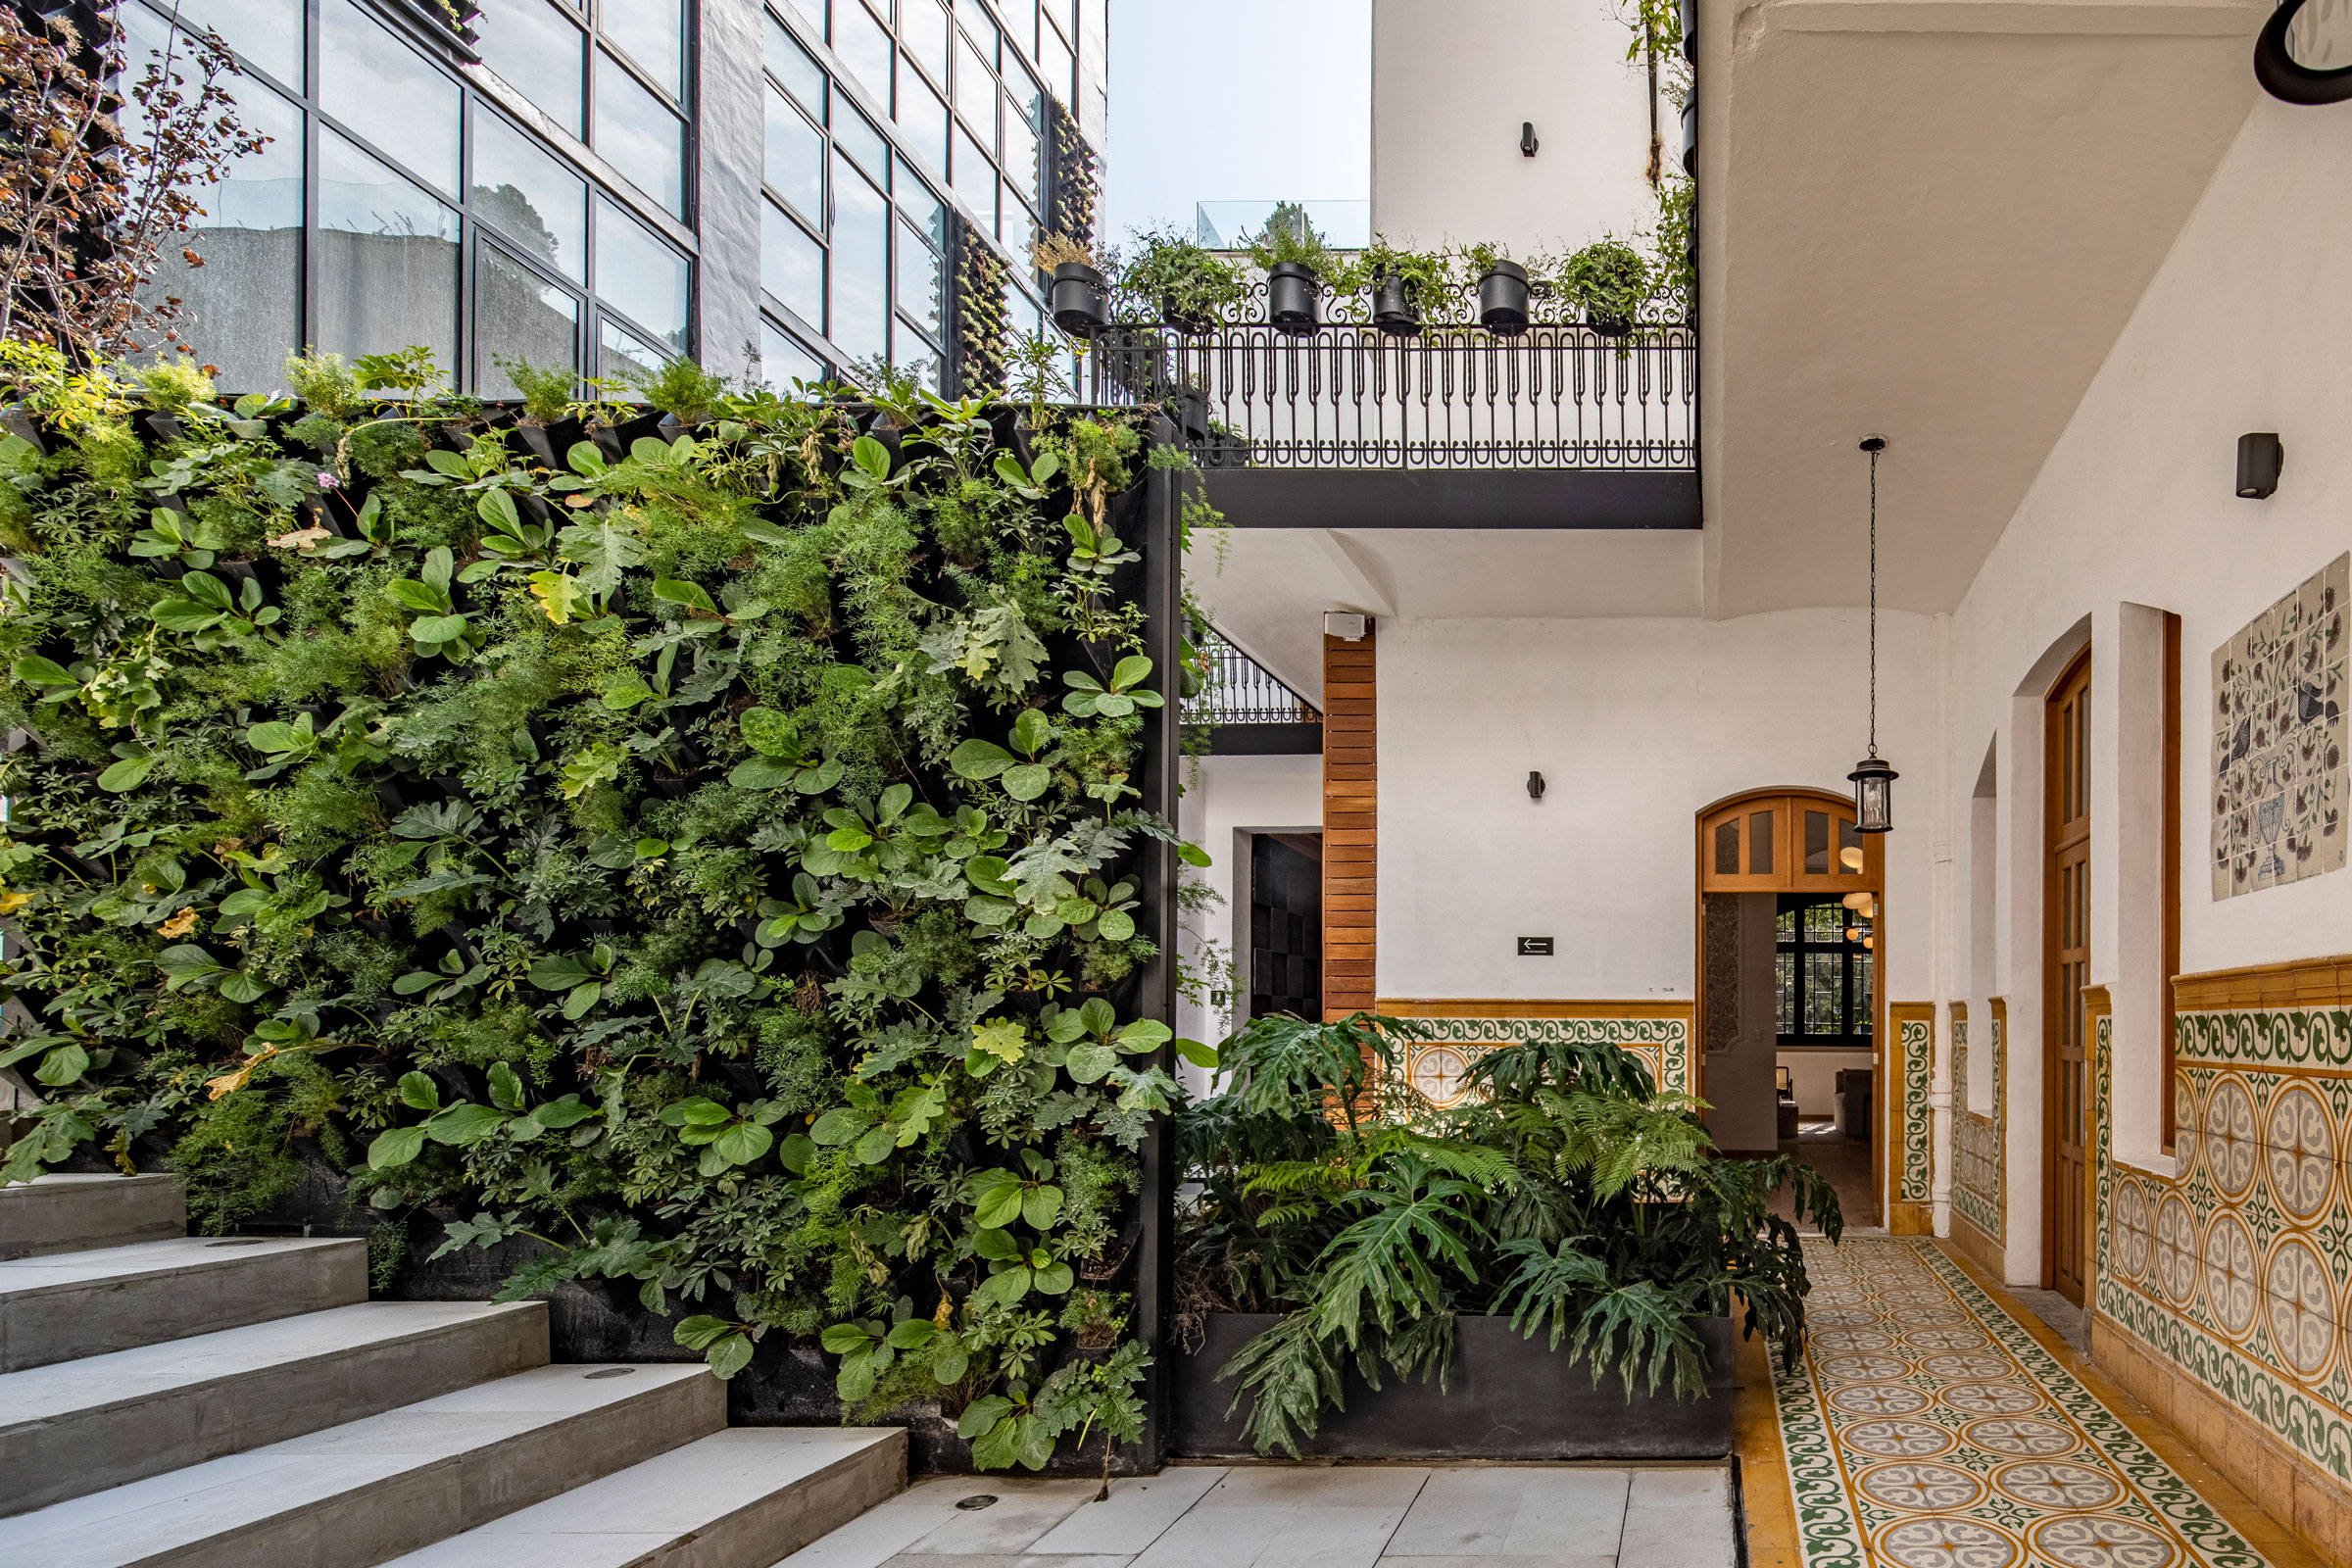 BRAG Arquitectos Designed a Green Apartment Complex Around This Historic Mexico City Home